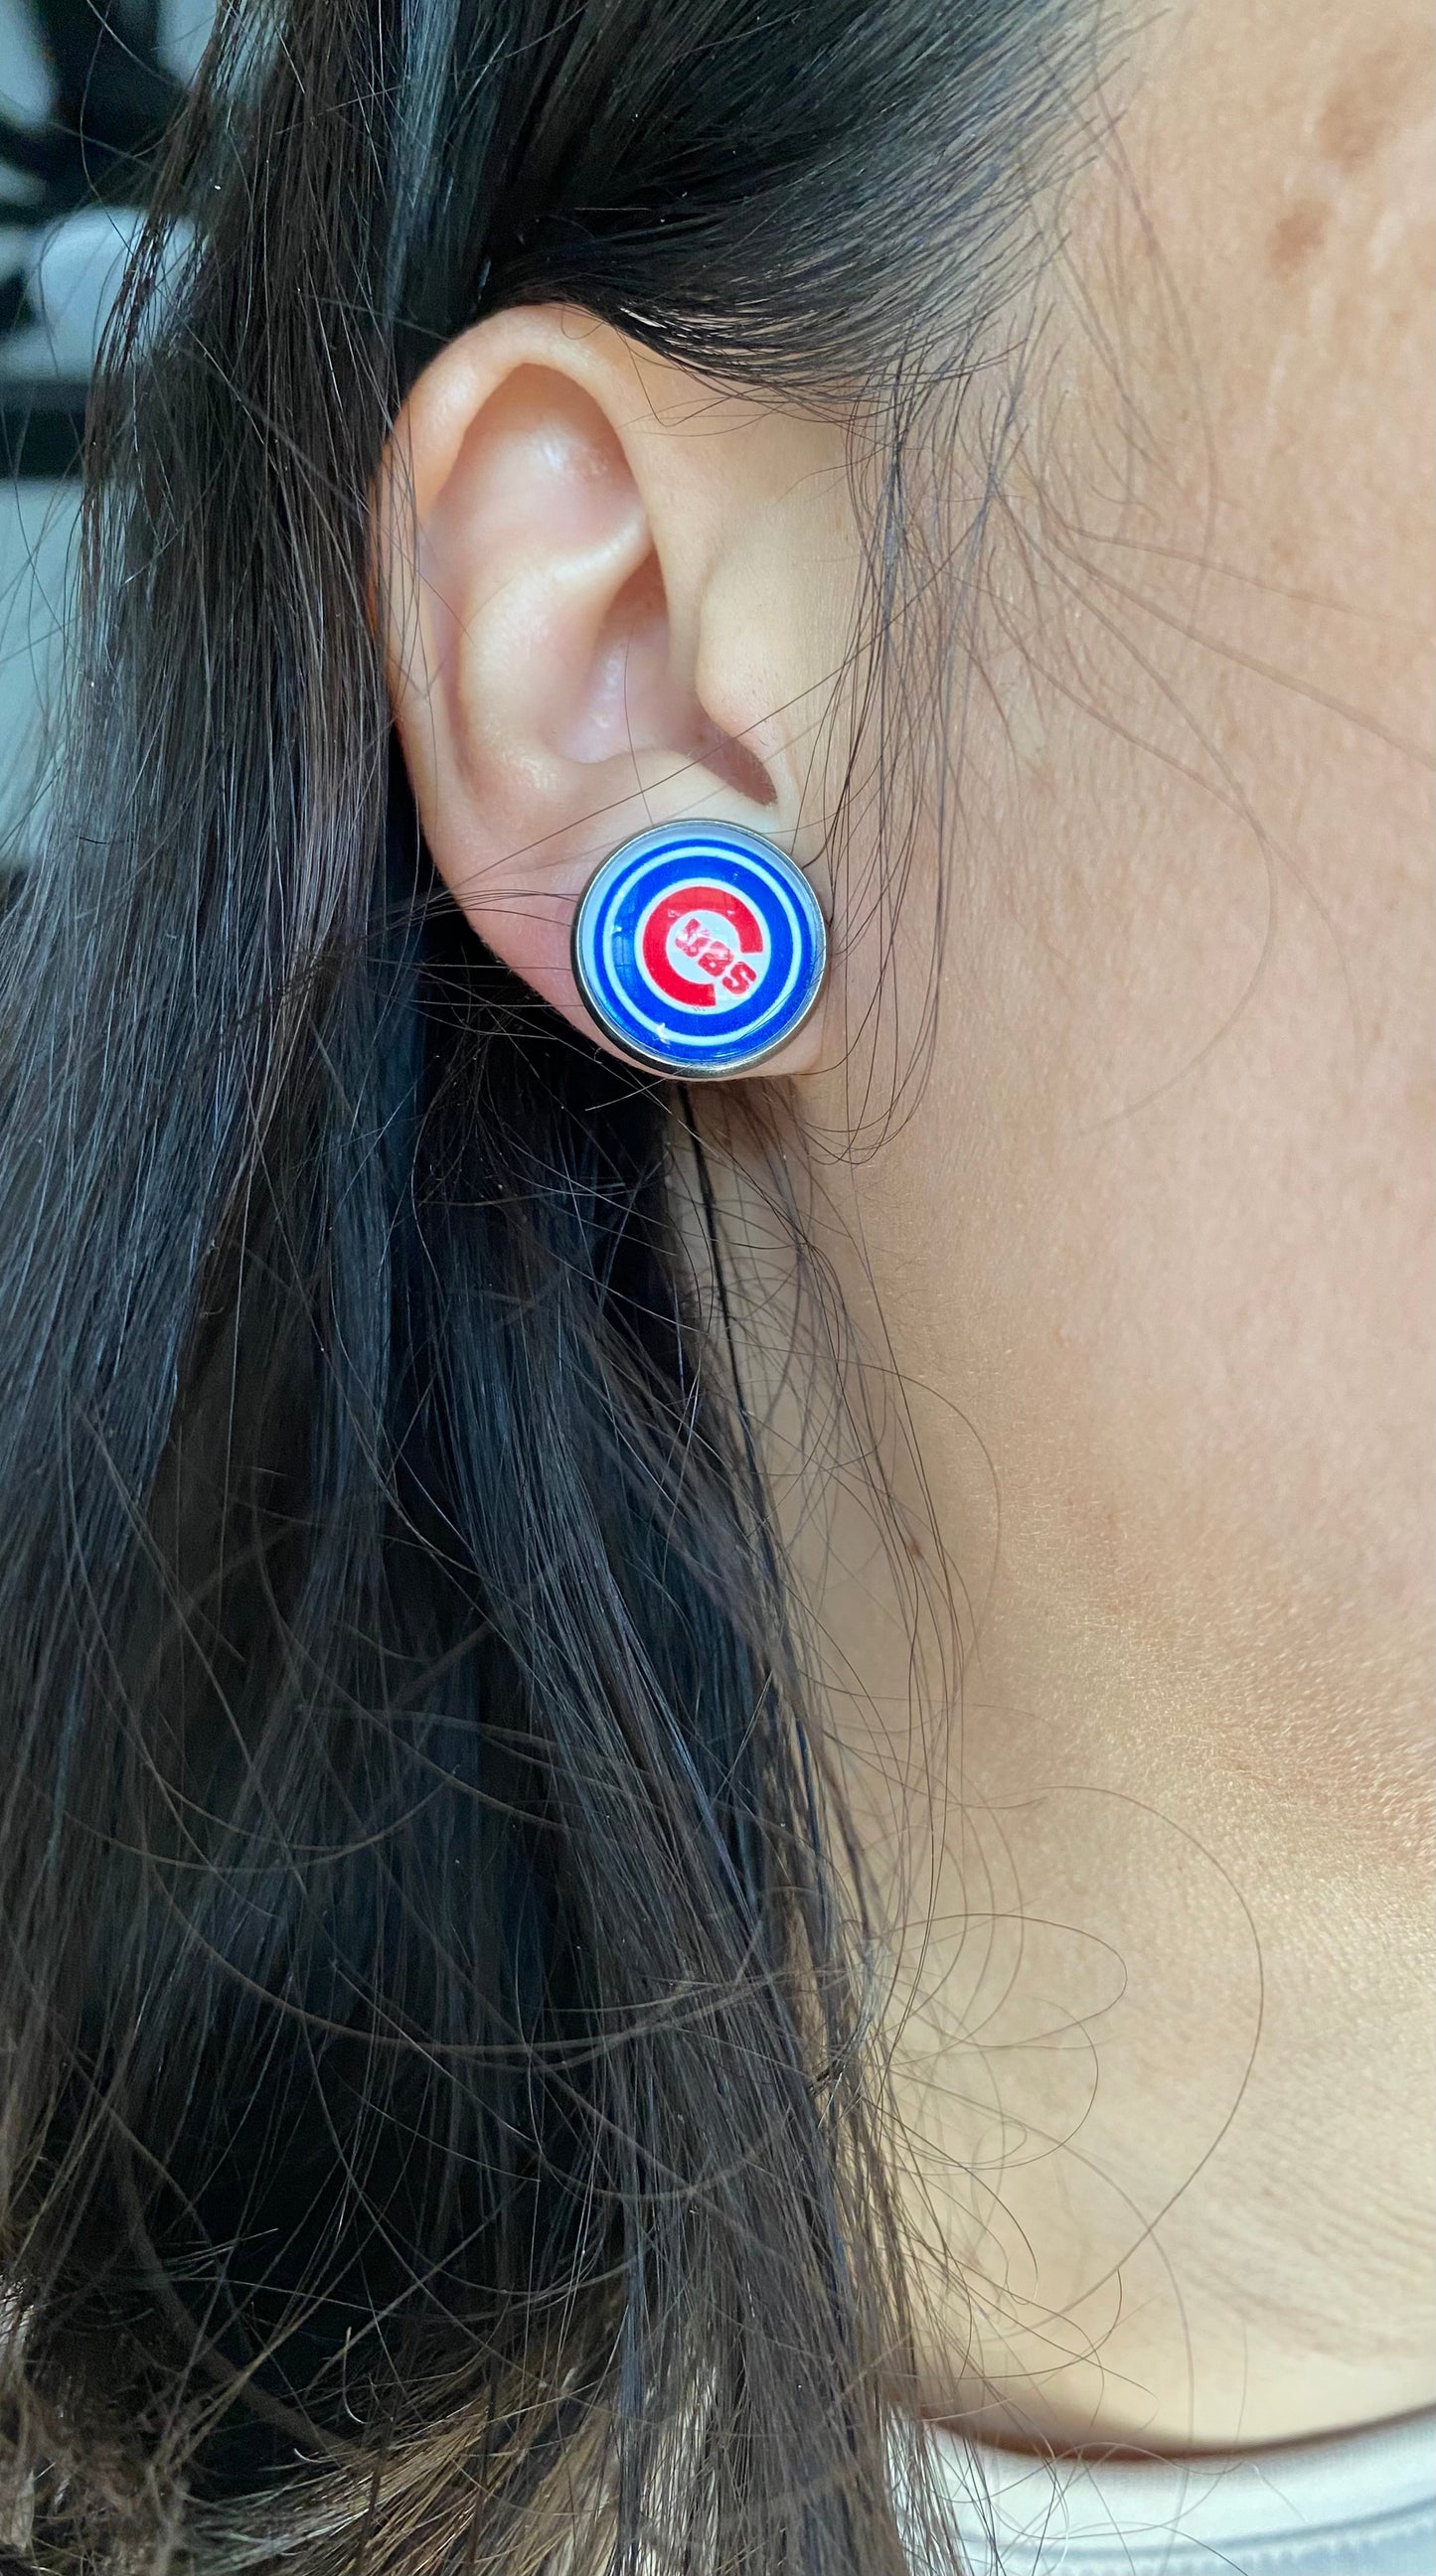 Chicago Cubs Stud Earrings